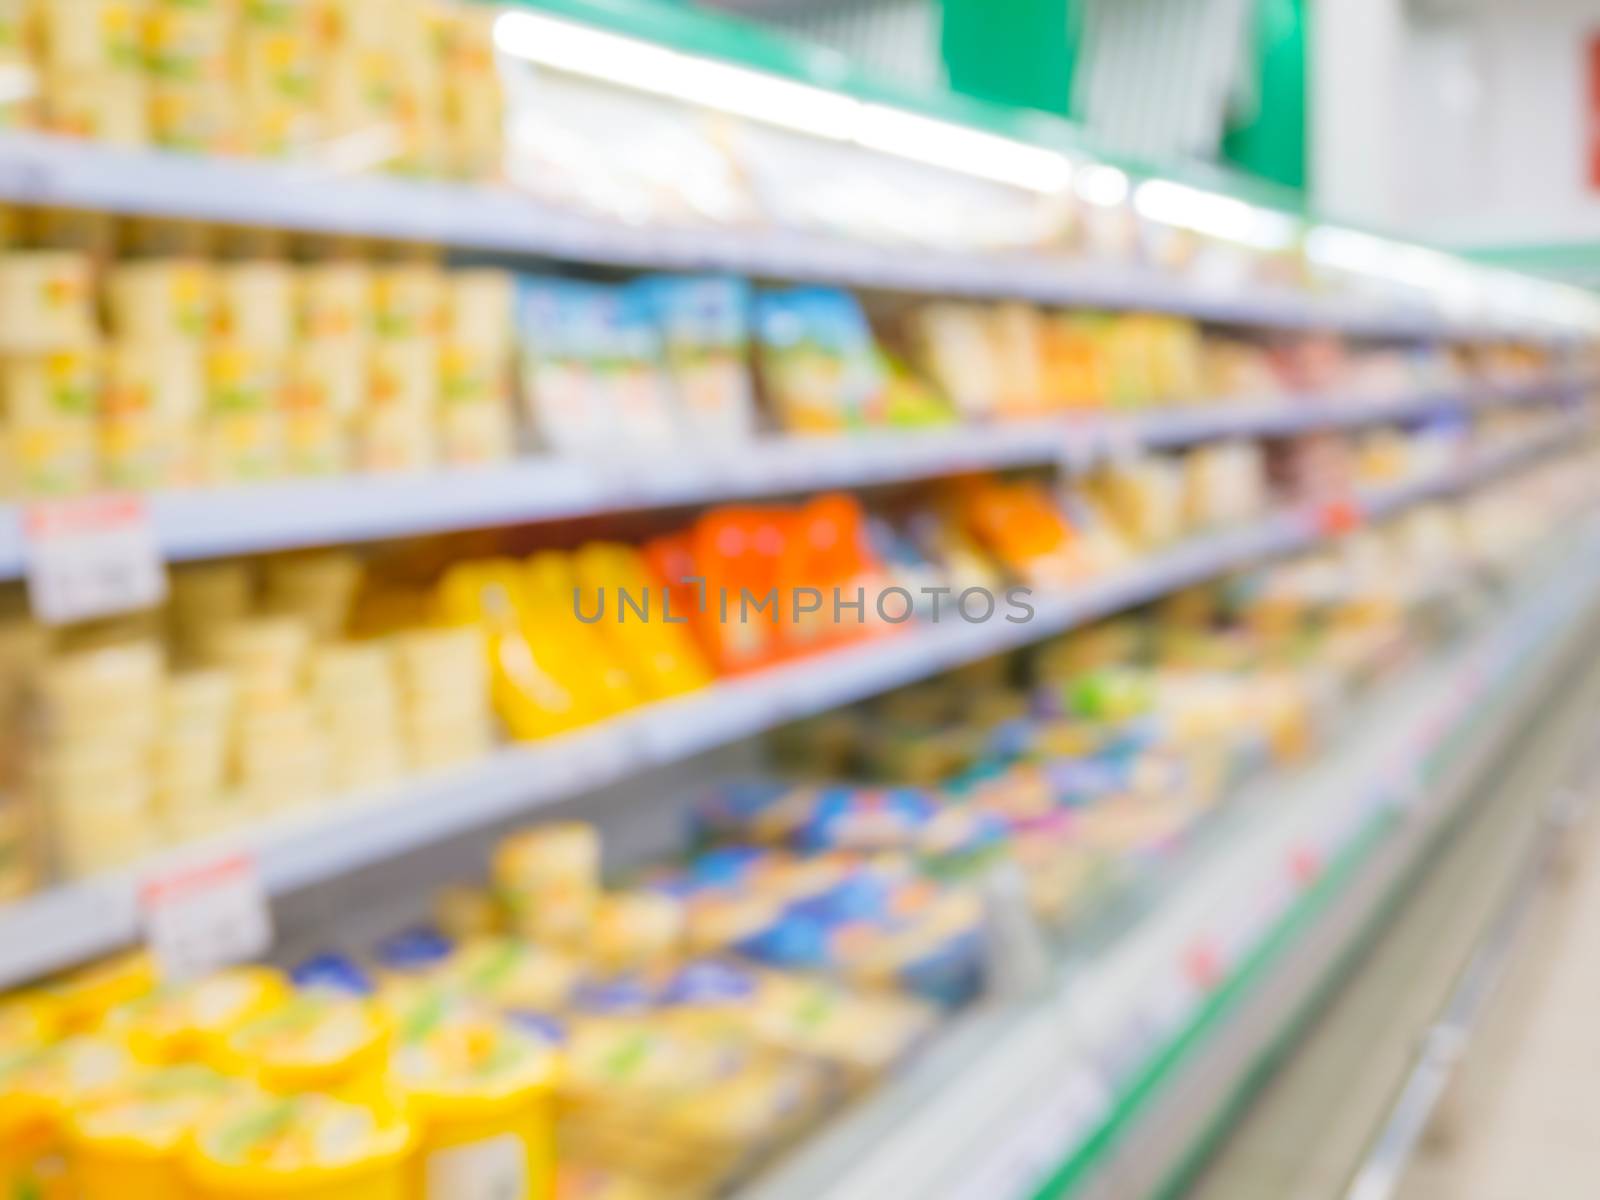 Defocused blur of supermarket shelves by fascinadora